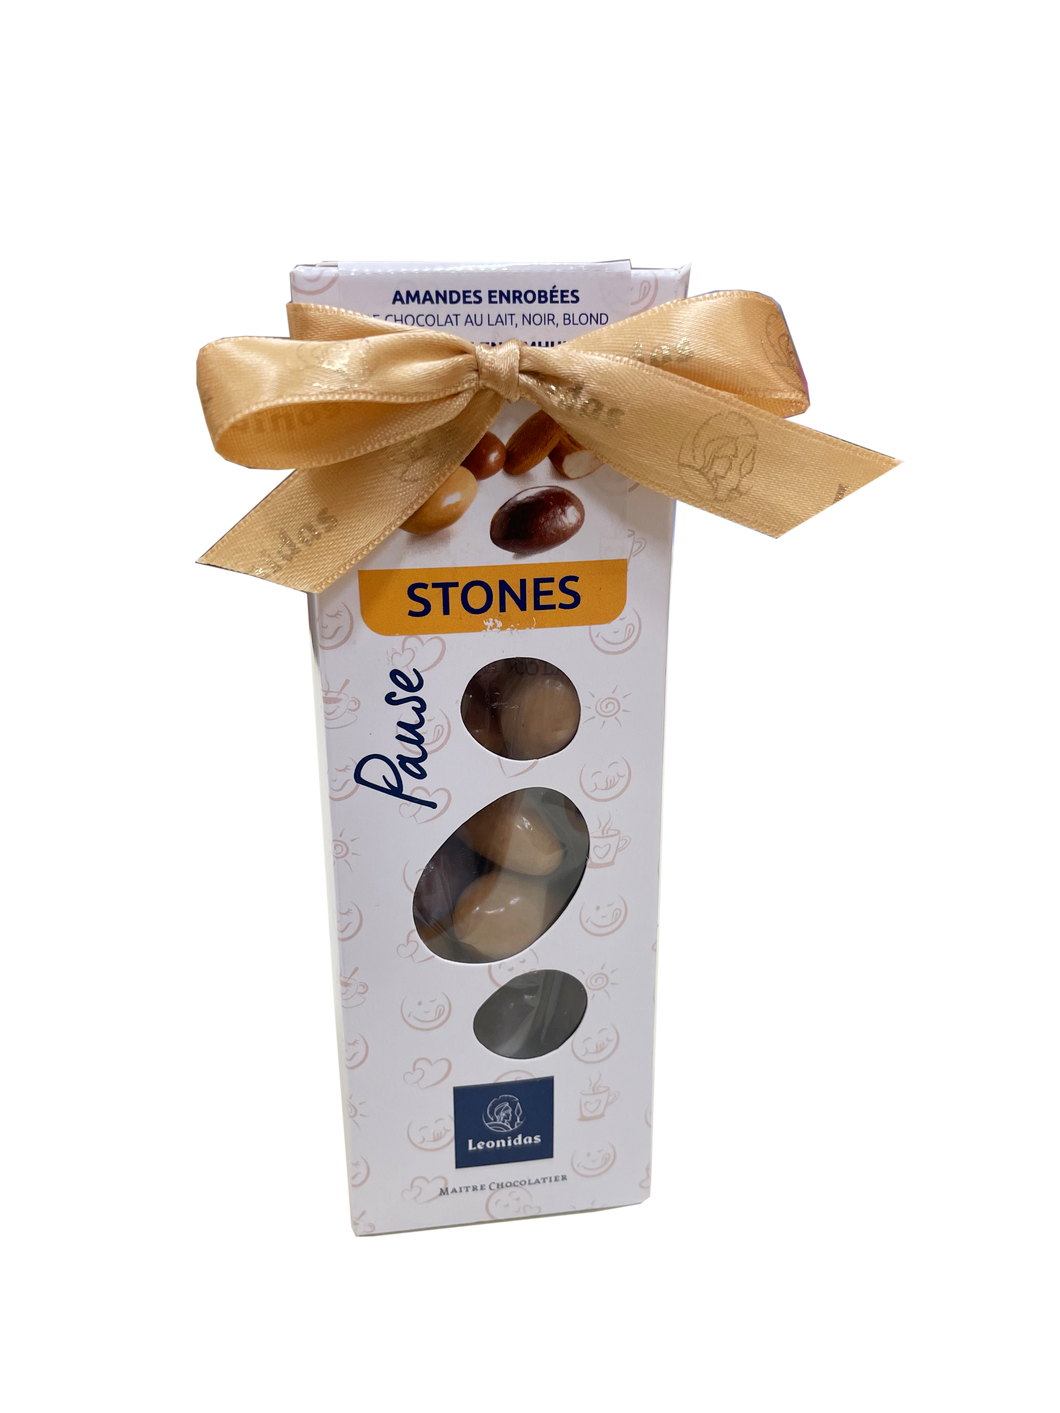 Leonidas Chocolate Almond Stones Gift Box 200g 原粒杏仁朱古力禮盒 (200克)